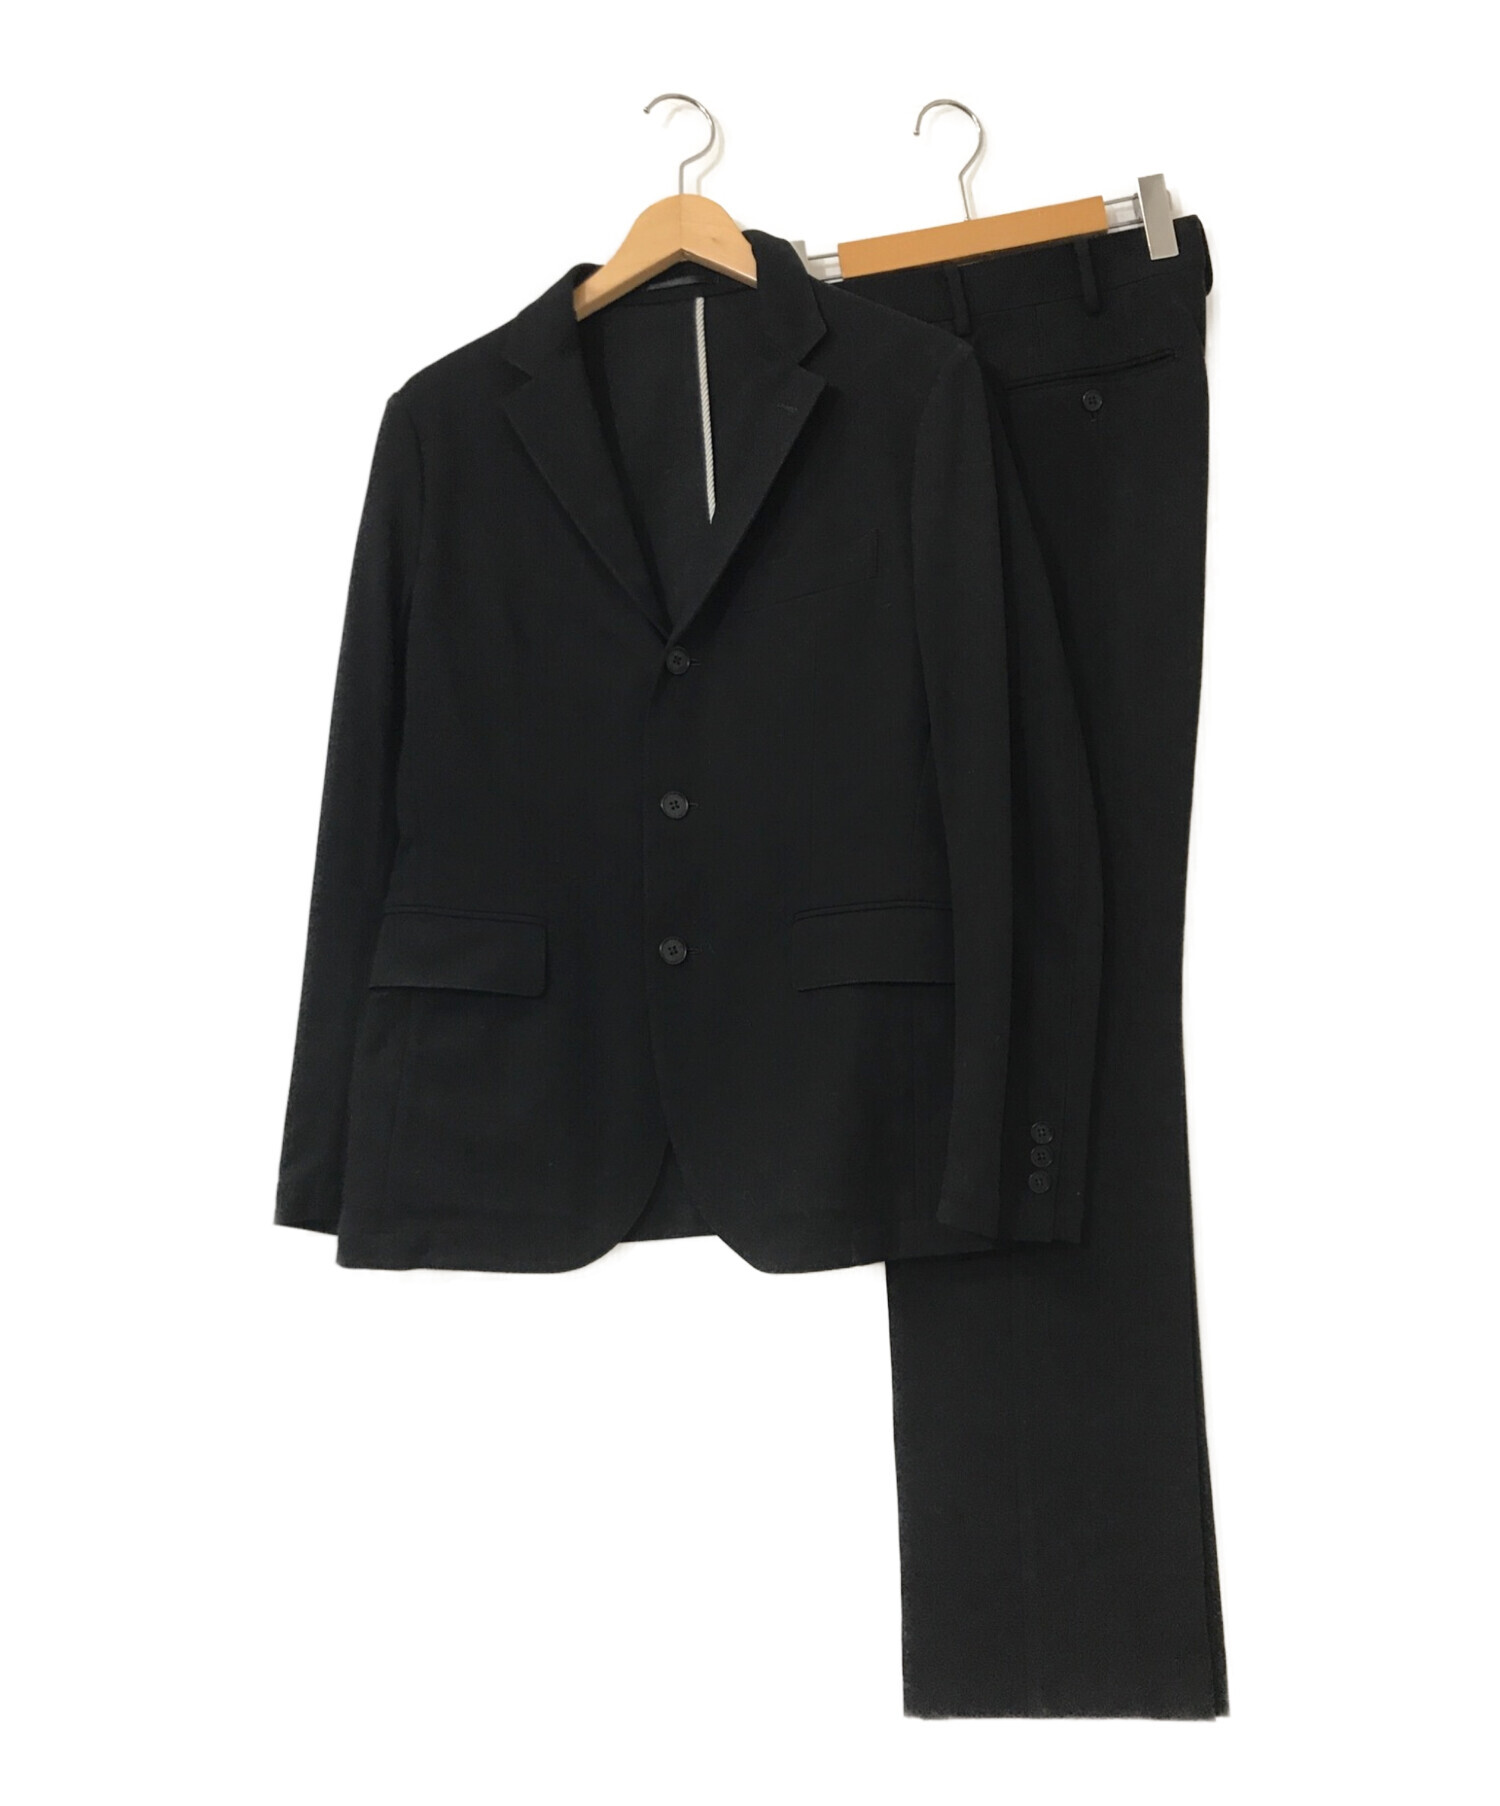 THE STYLIST JAPAN 初期 3ピース モールスキン スーツ - スーツ